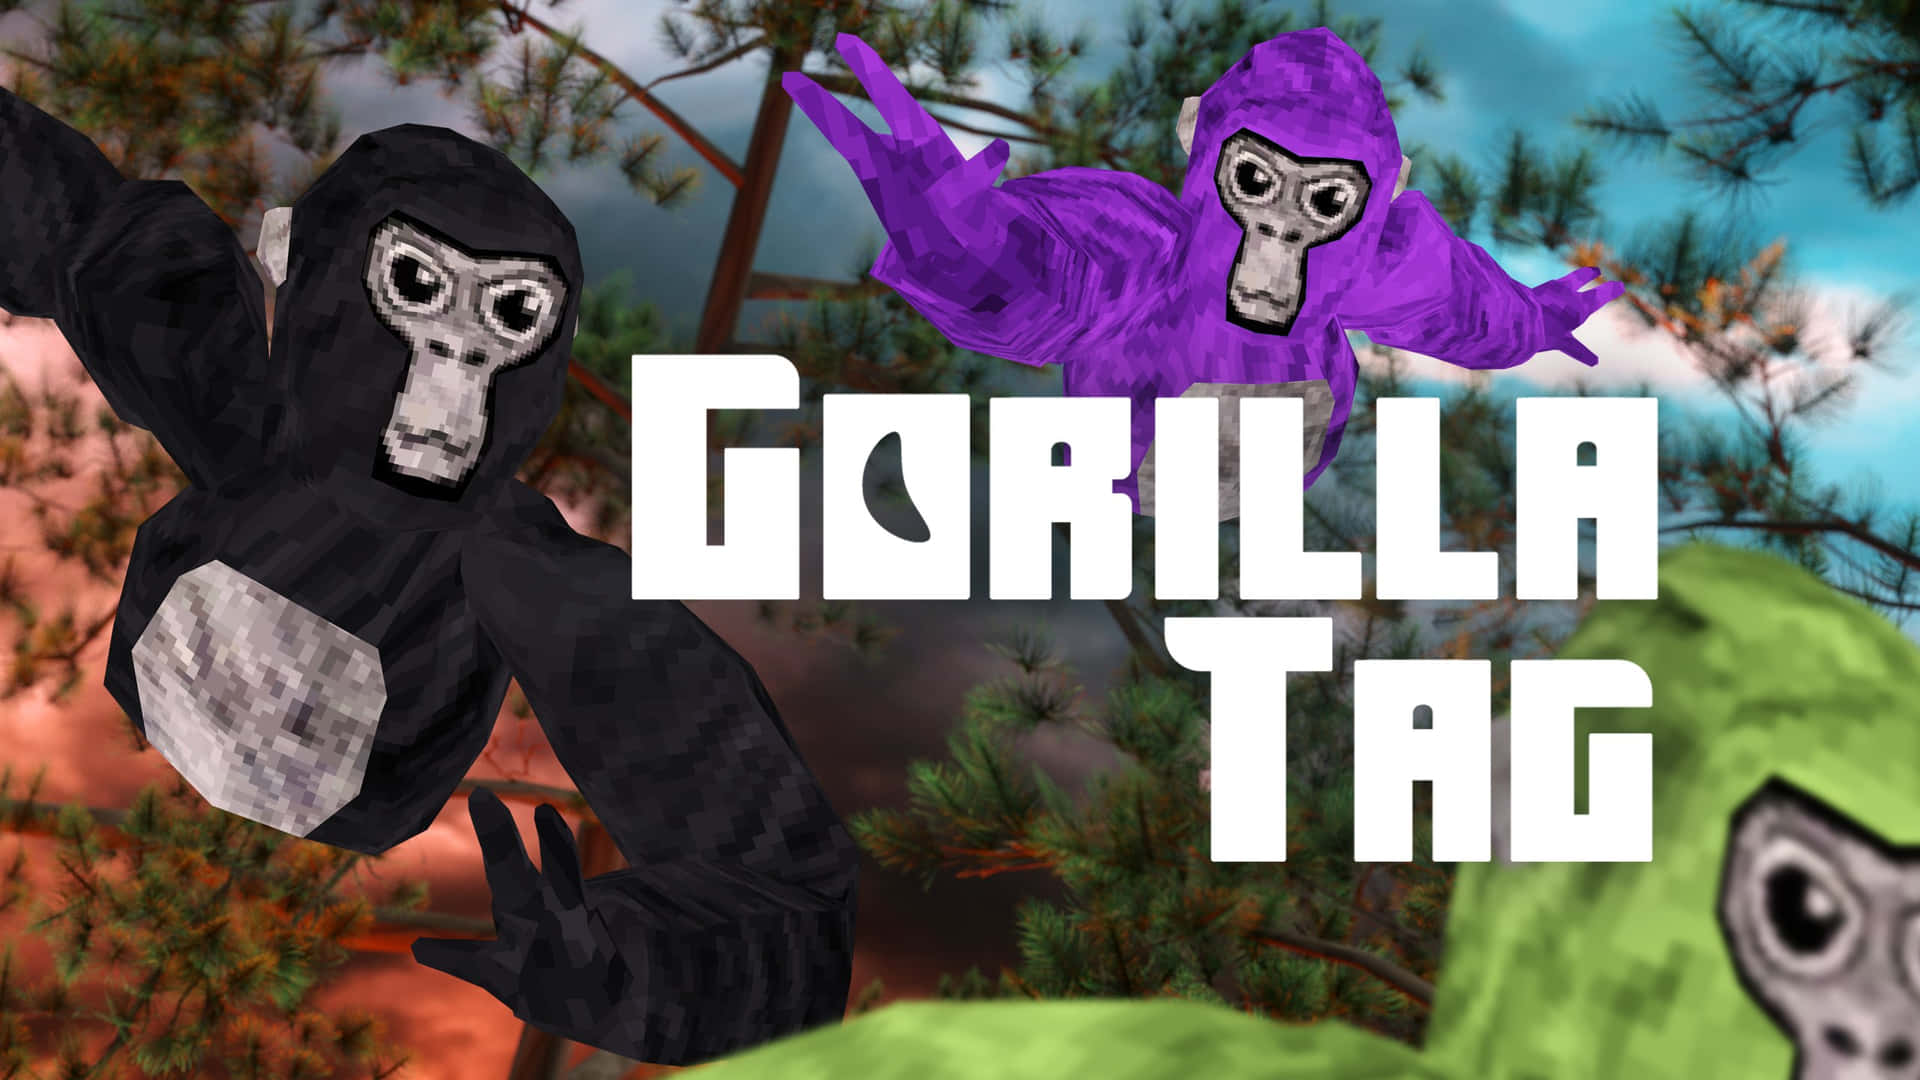 Gorilla Tag Wallpaper Discover more Cute, monkey tag, pink gorilla